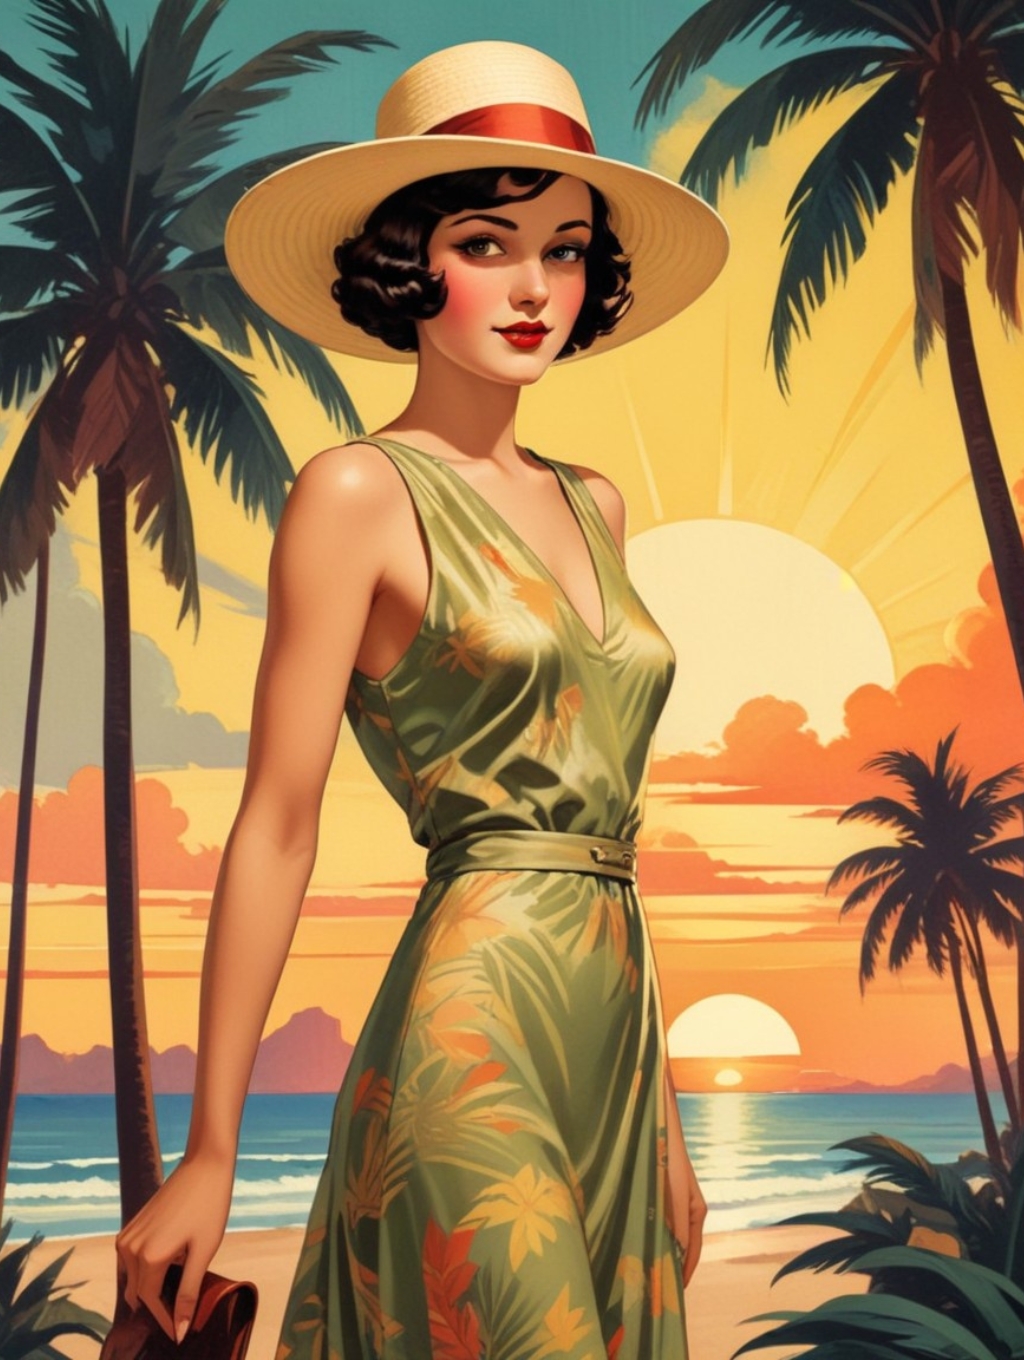 Art Deco Travel Posters Women: Image Frames & Self-Portraits-Theme:6